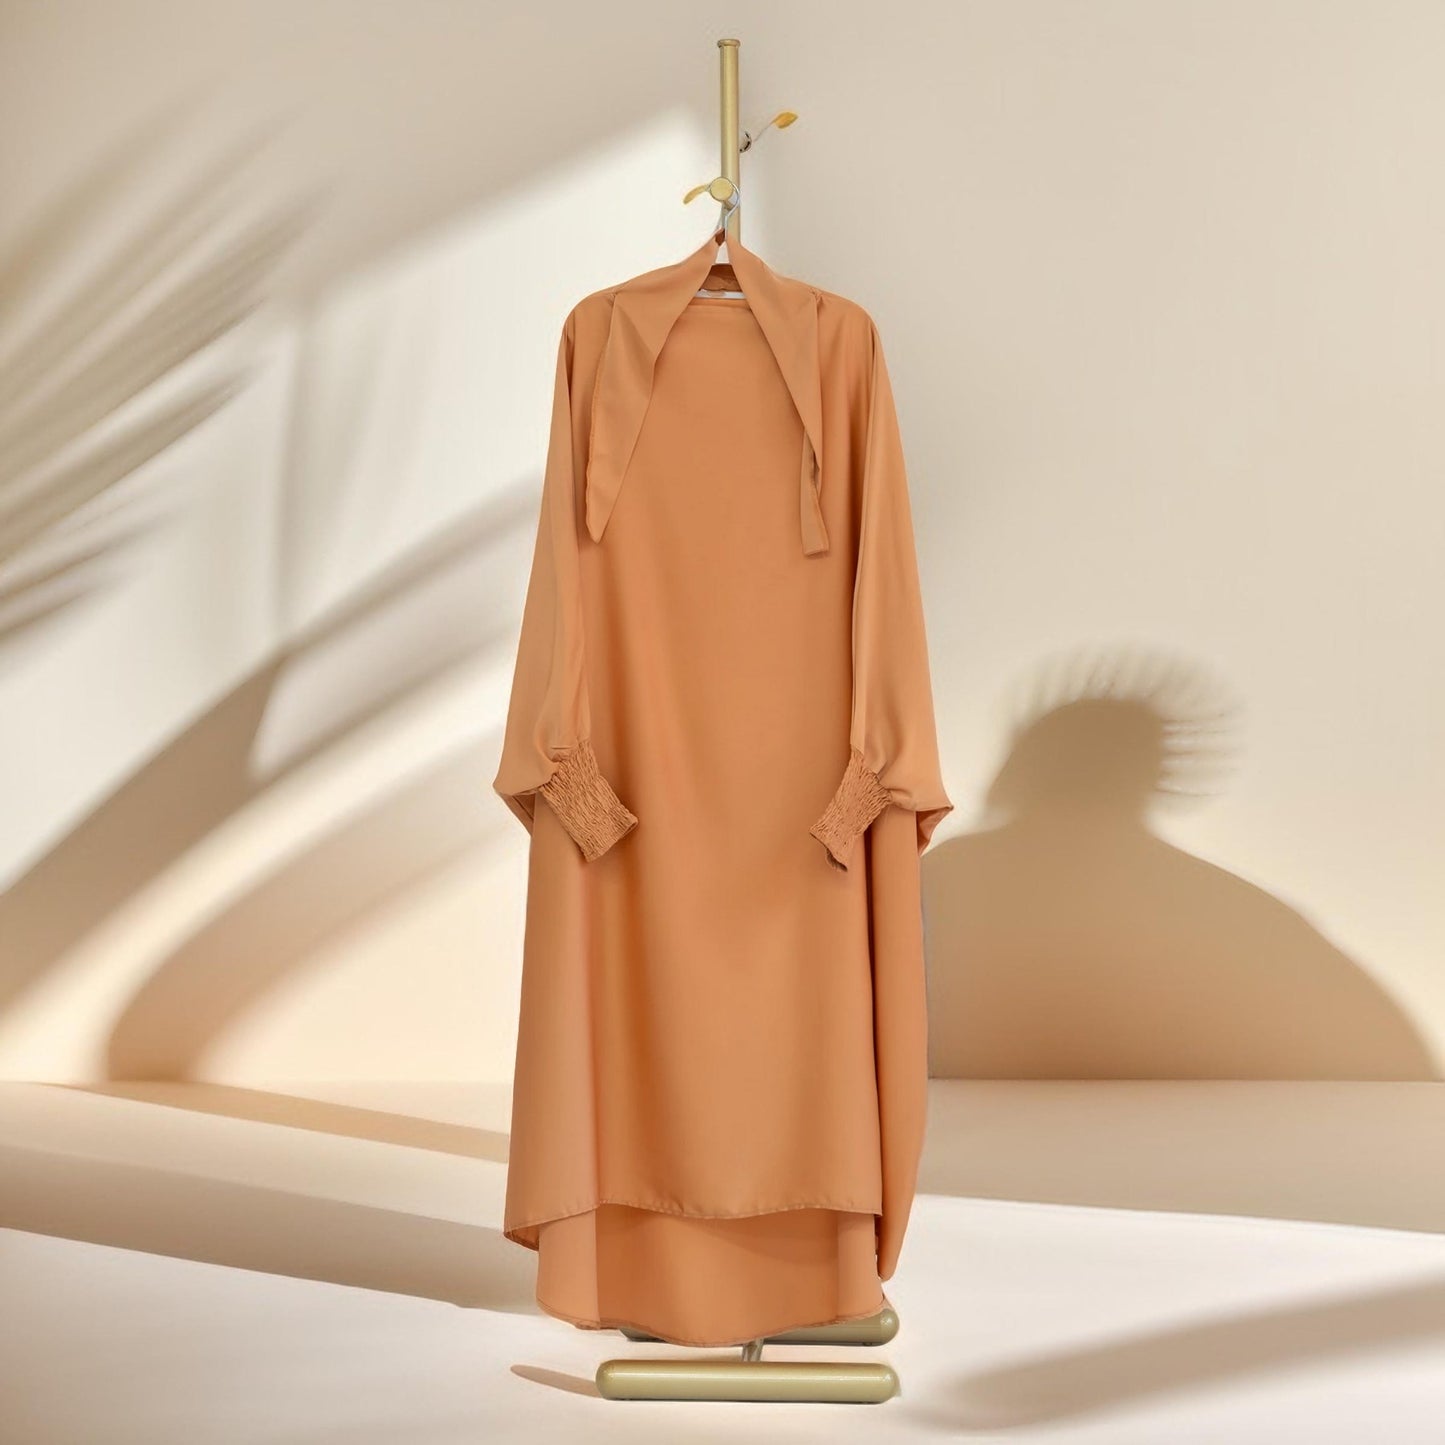 Mommy & Me Abaya Prayer Dresses: Elegant Matching Sets for Mother-Daughter Bonding - Try Modest Limited 